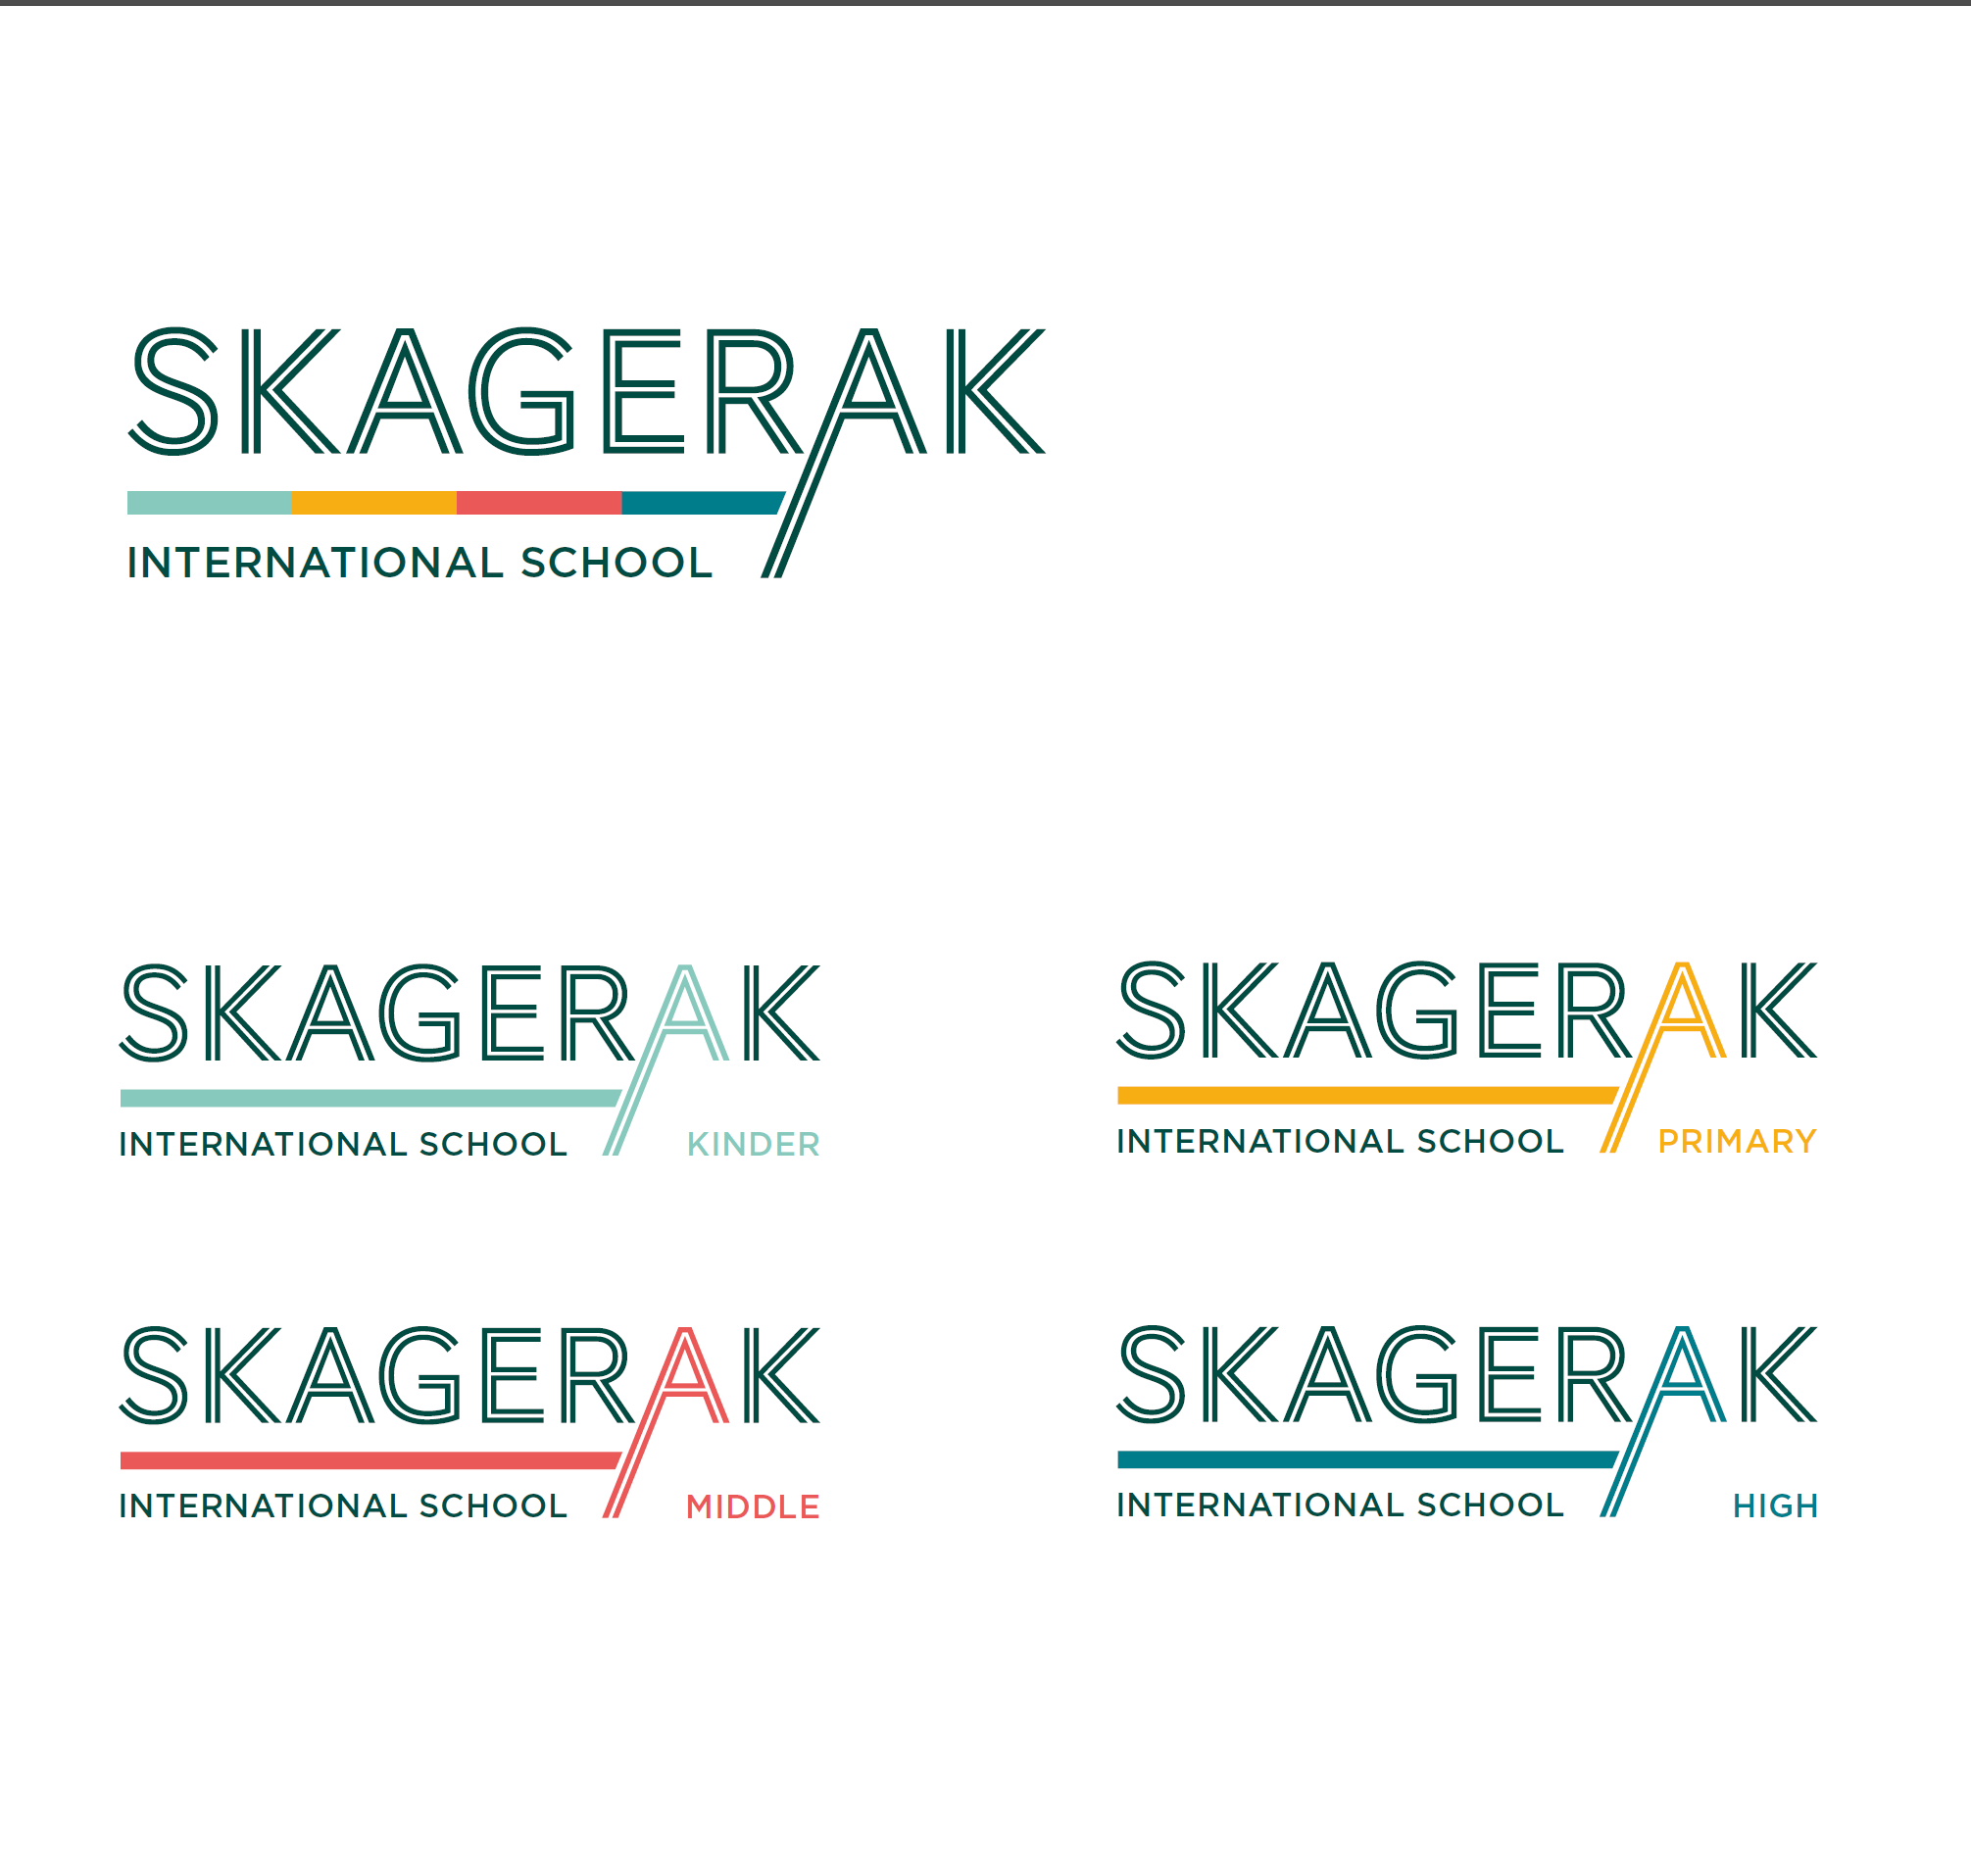 Each school example logos